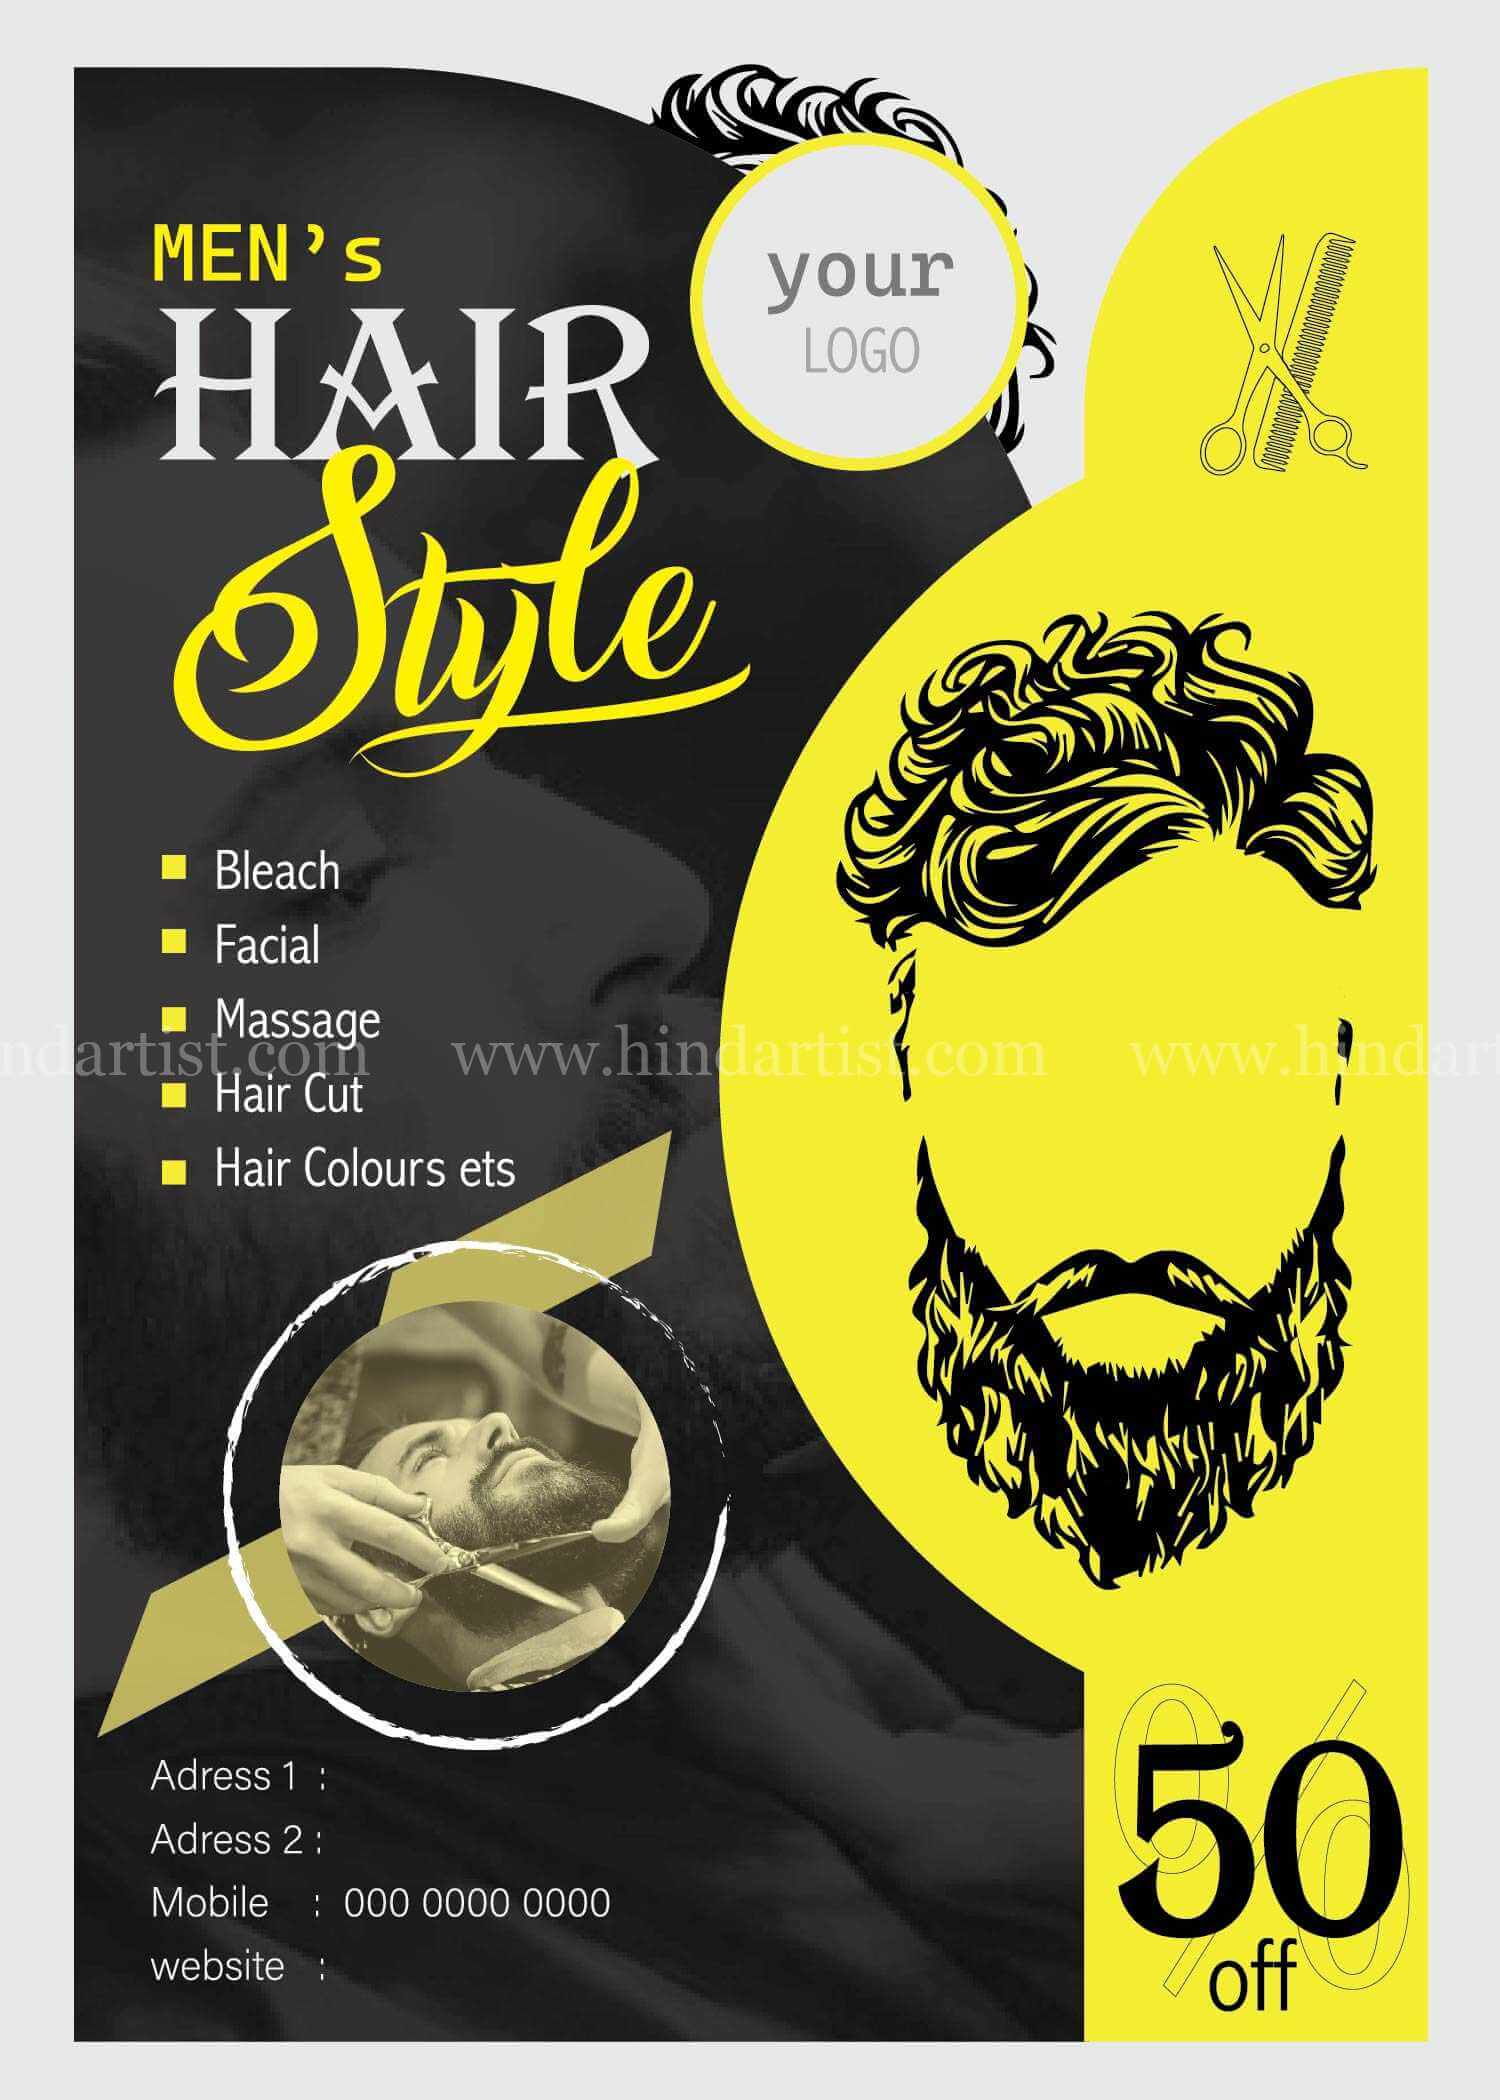 Hair salon logo design Royalty Free Vector Image